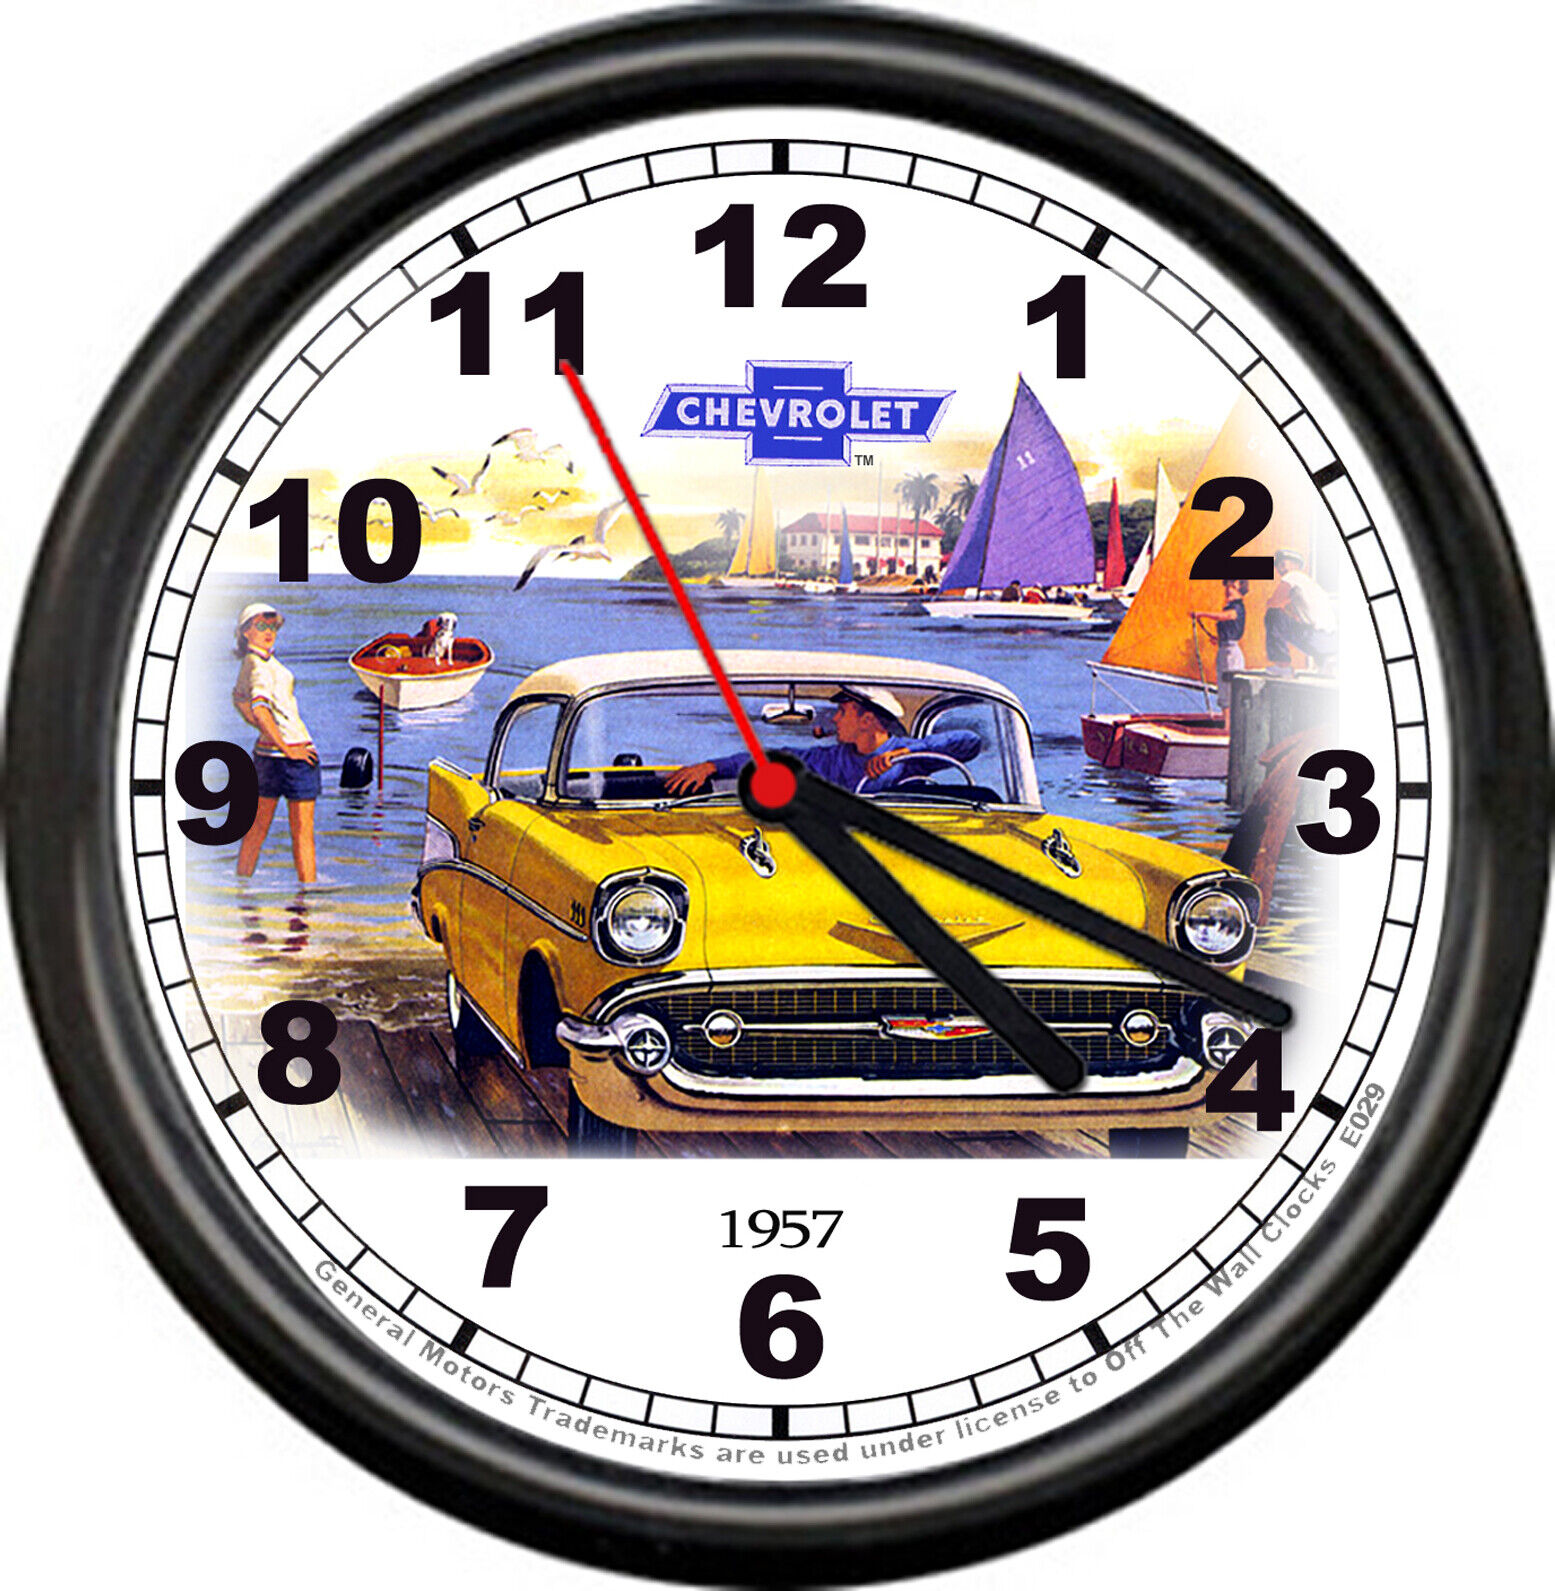 Licensed 1957 Chevy 2 Dr Belair Sedan Chevrolet General Motors Sign Wall Clock